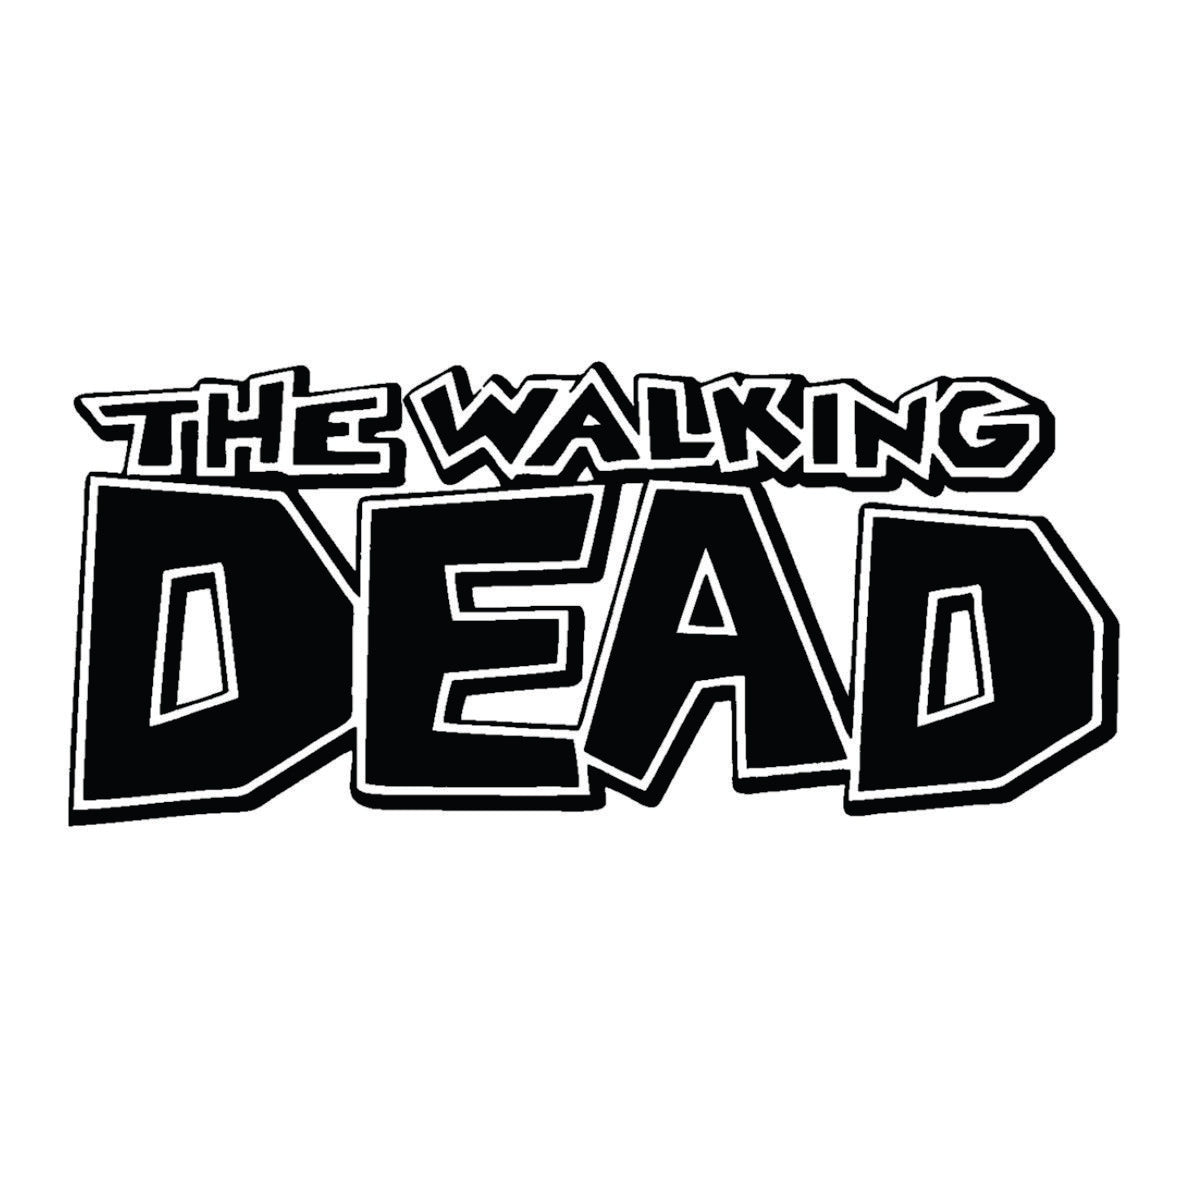 The Walking Dead Comic Series